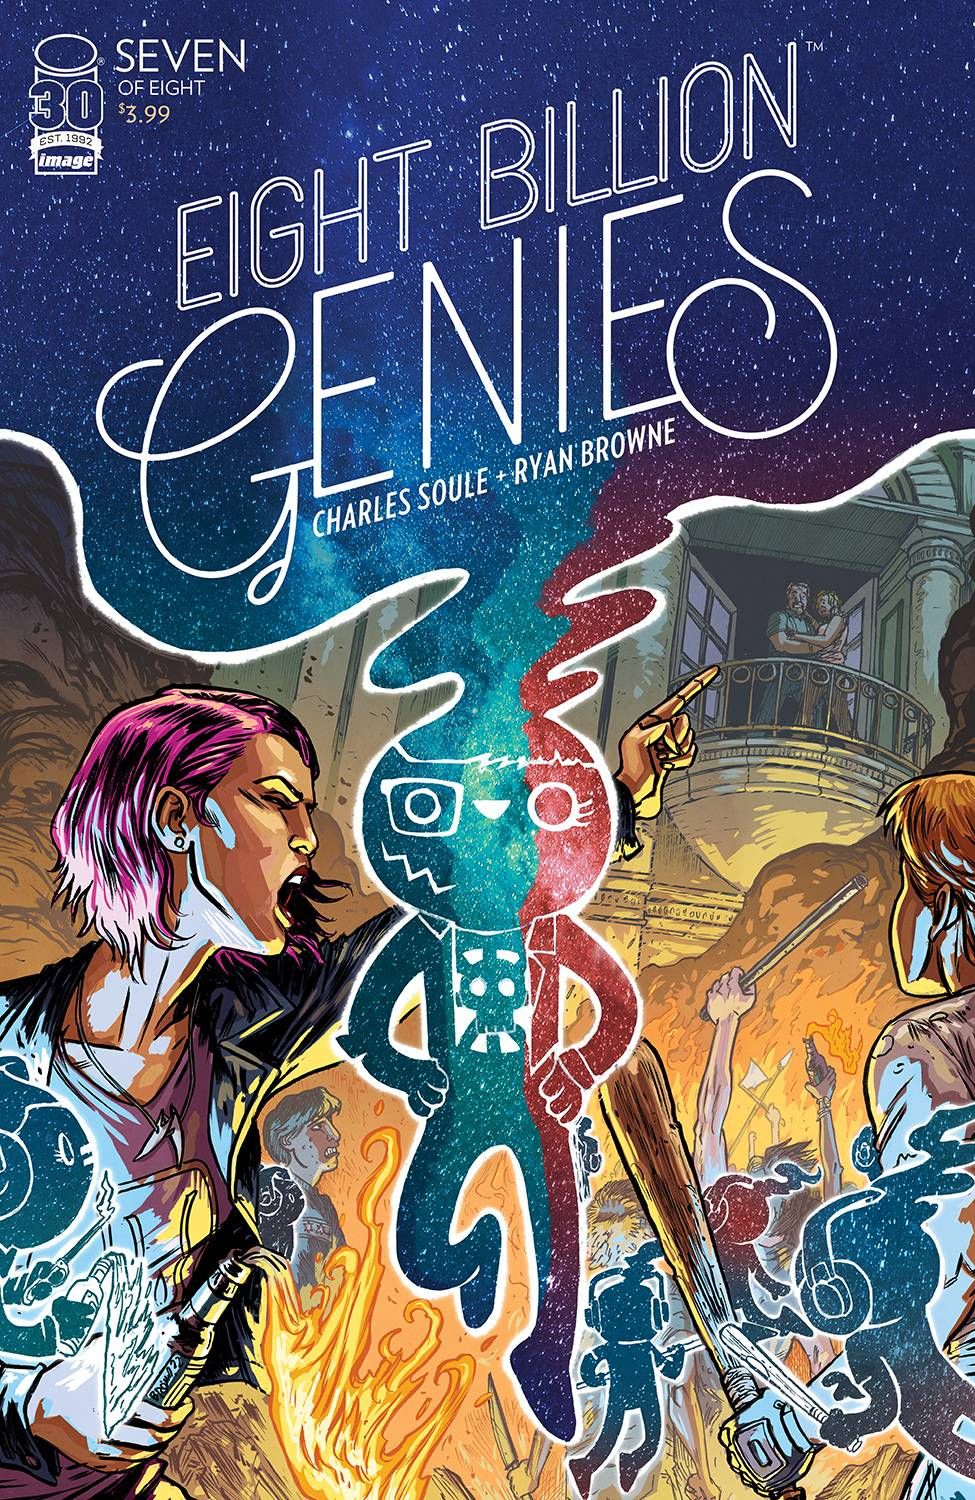 Eight Billion Genies #7 Comic